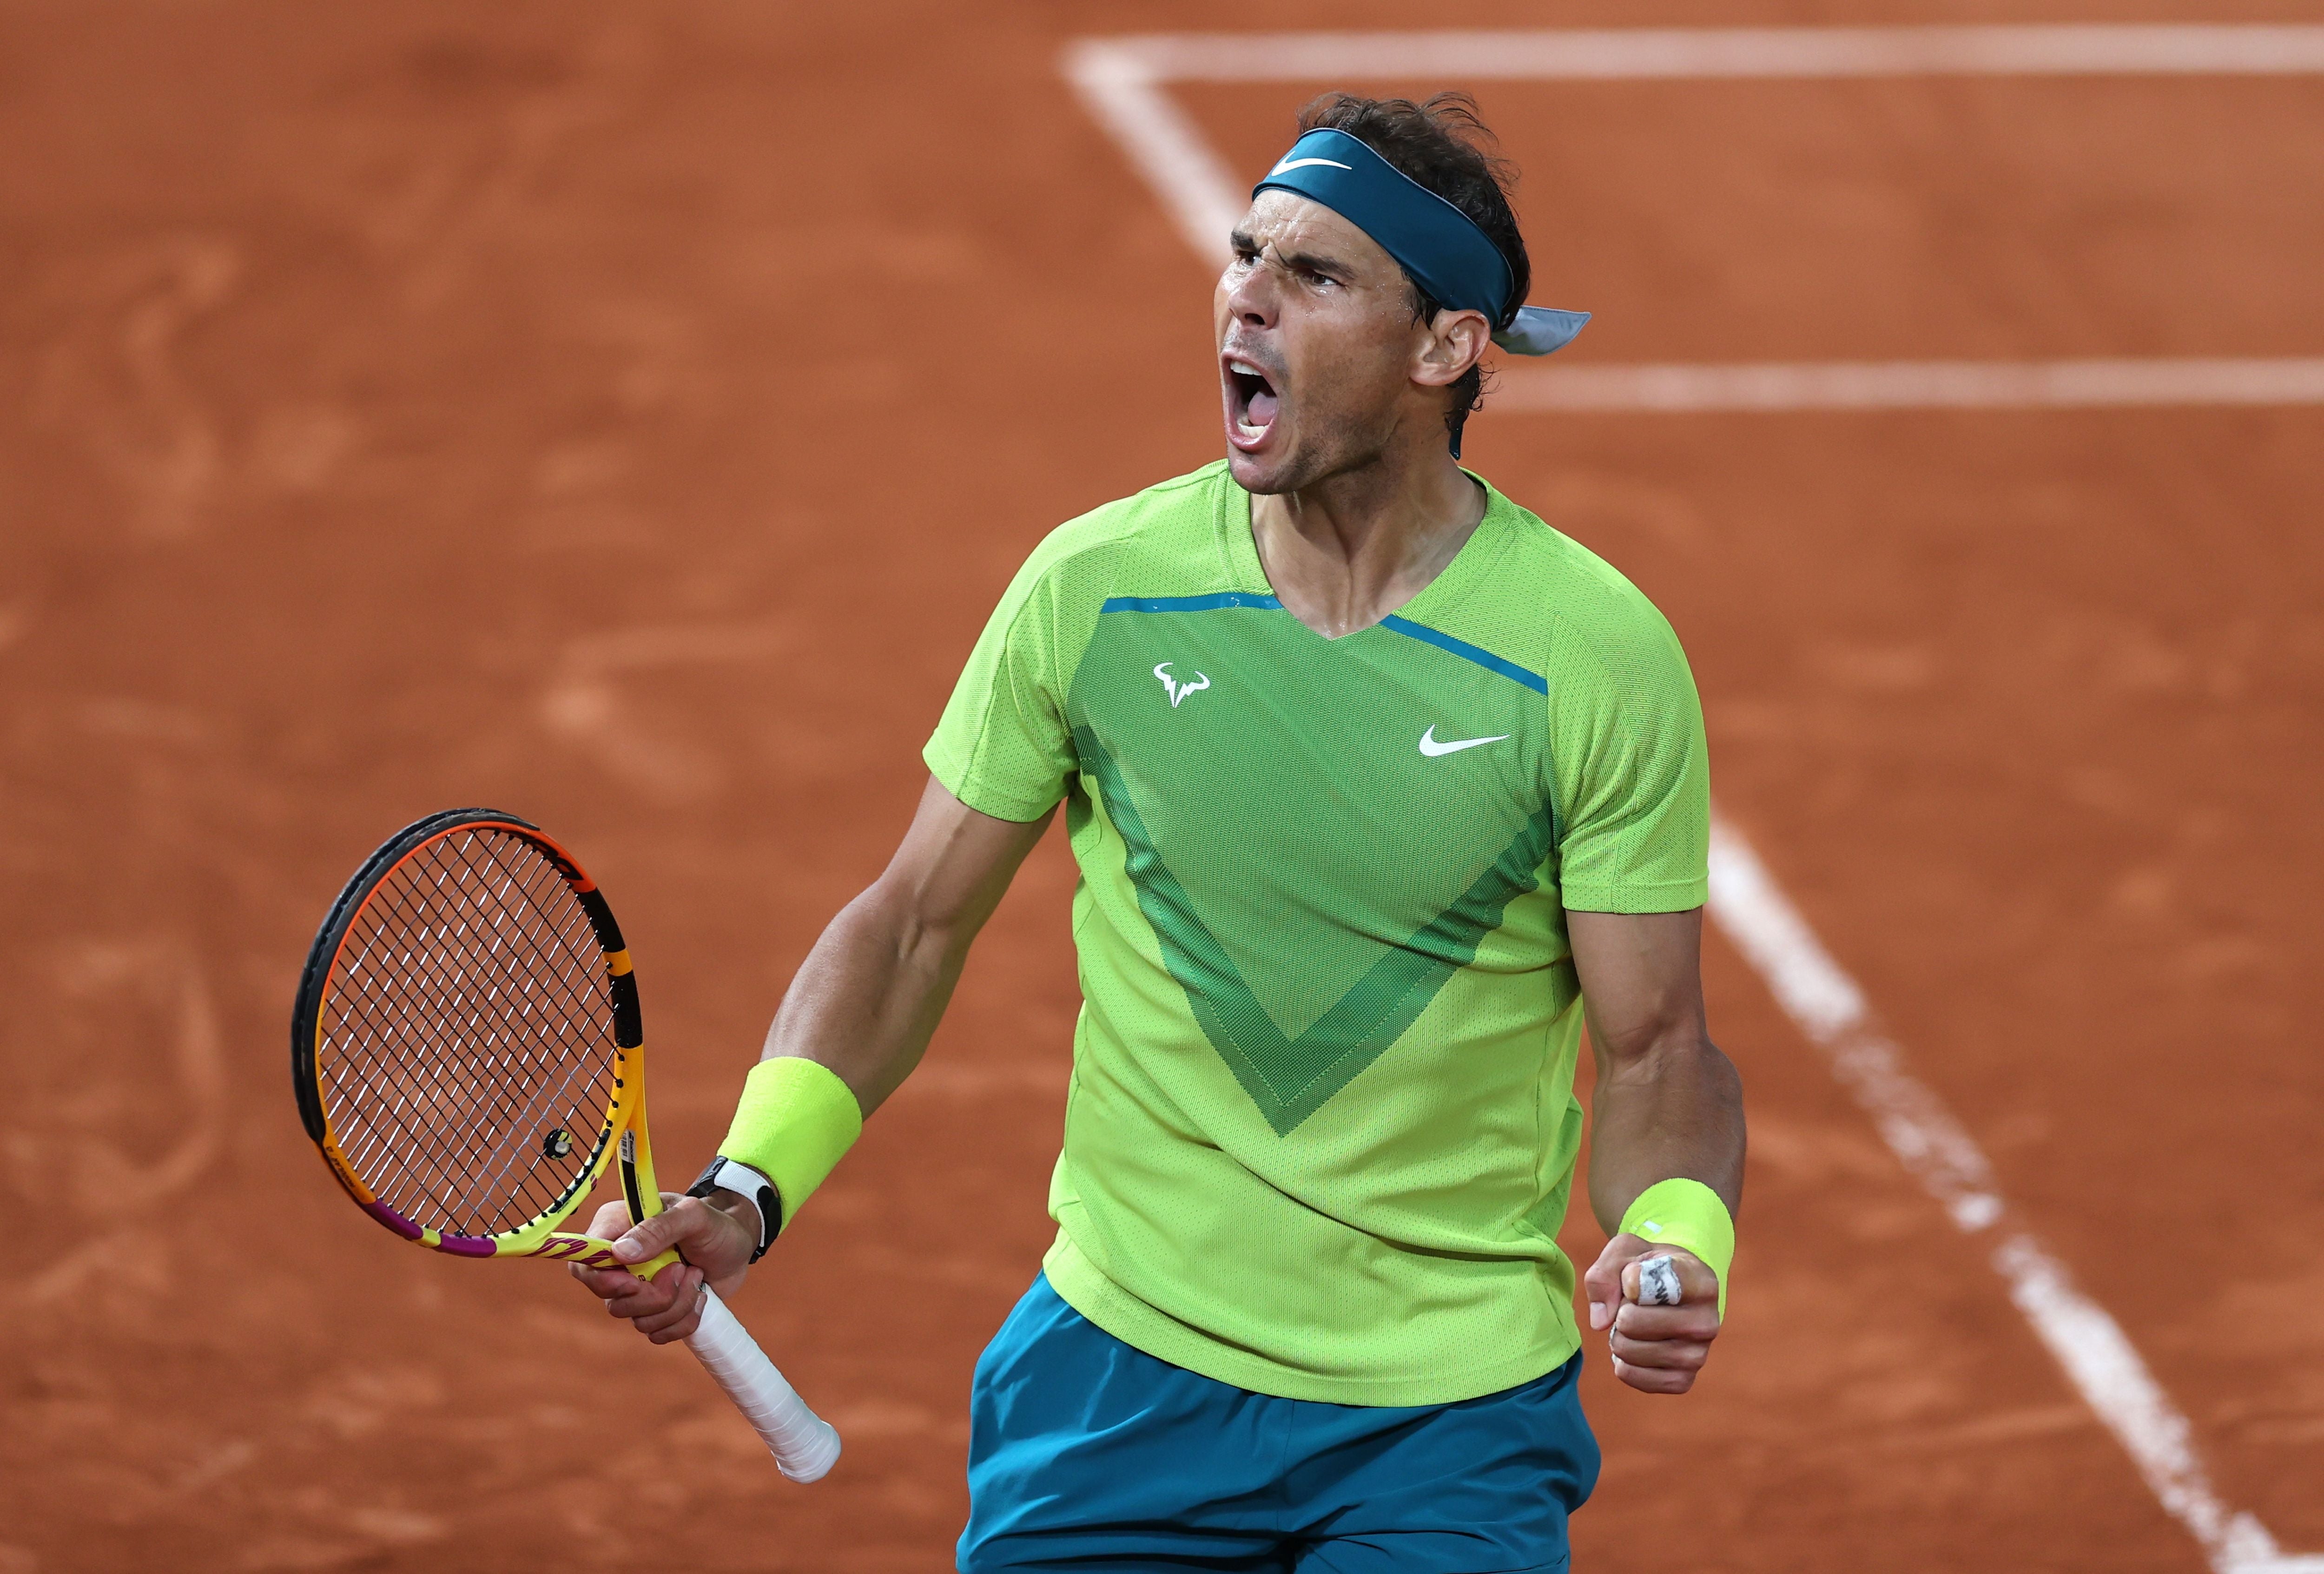 Viertelfinal in Paris Novak Djokovic gegen Rafael Nadal live